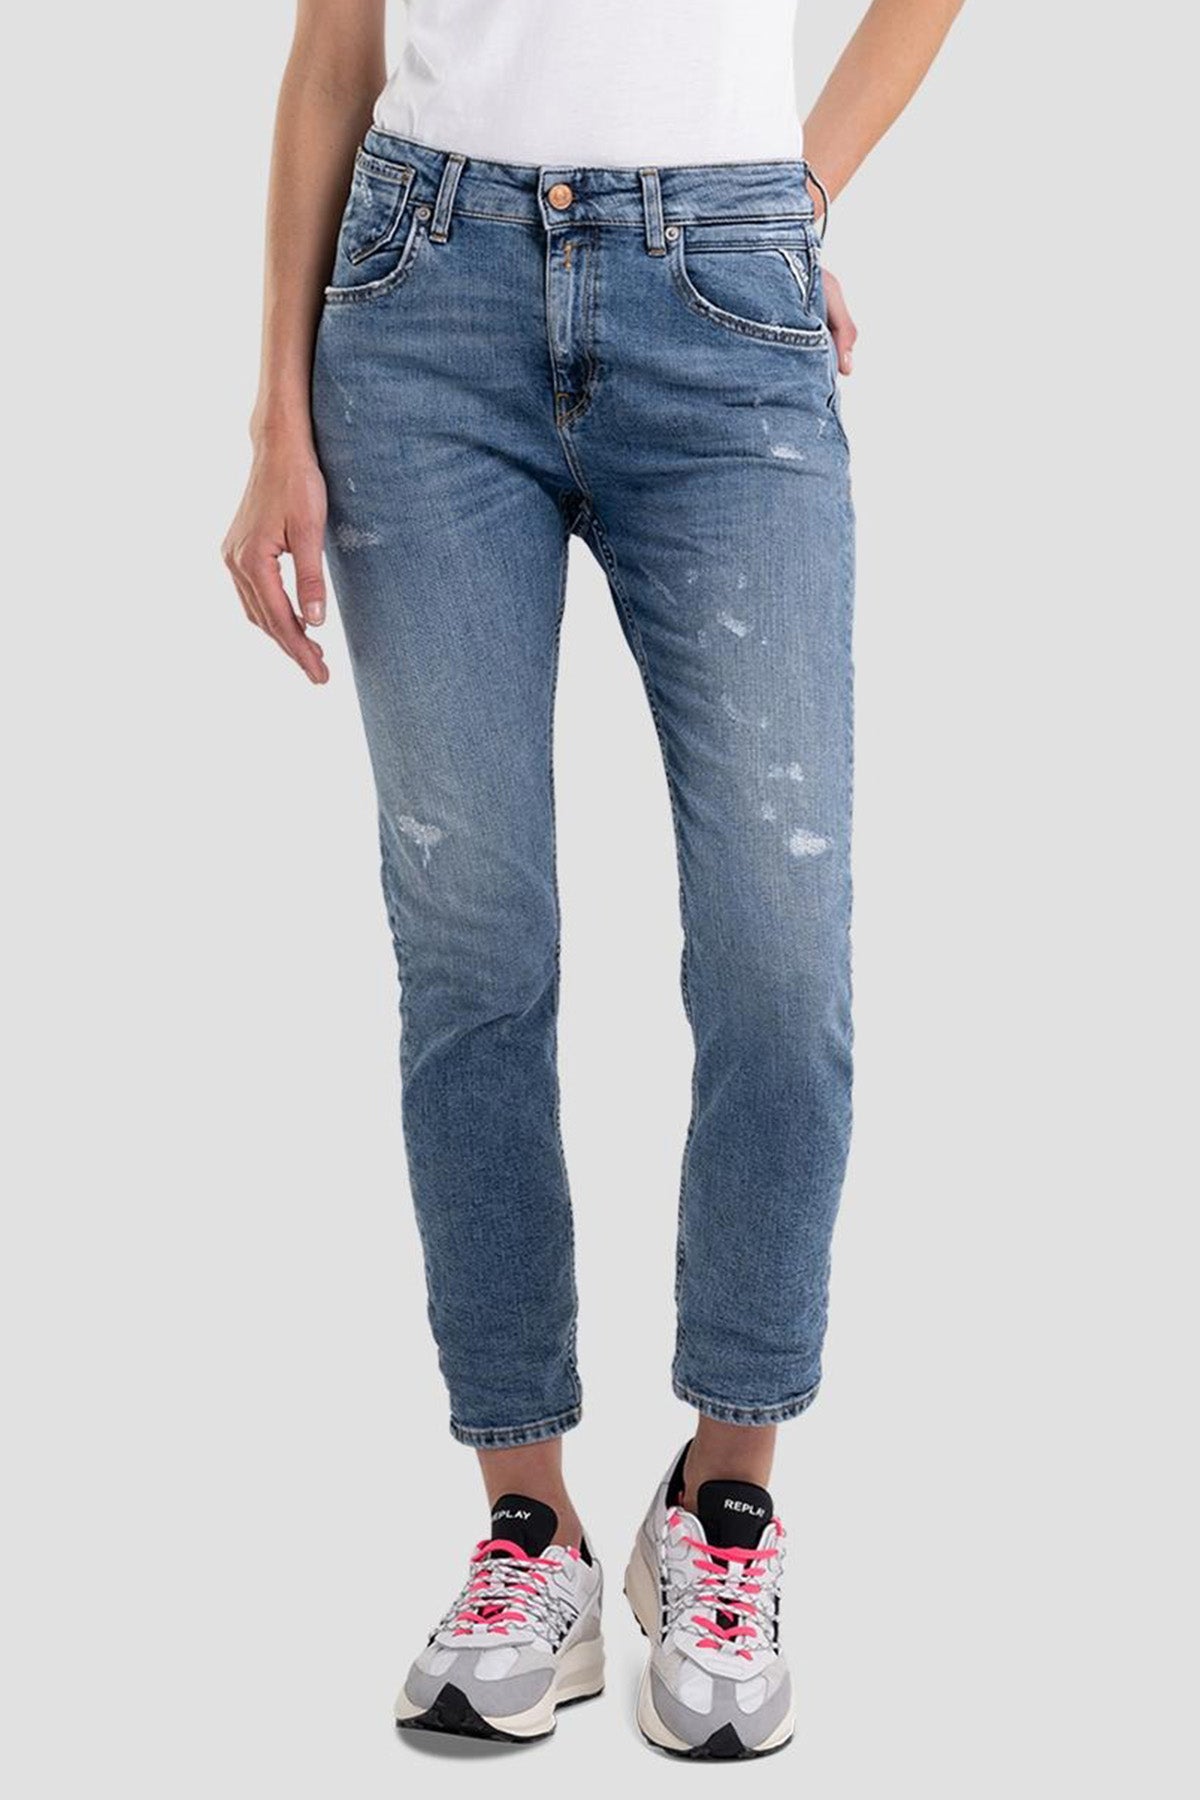 Replay Marty Slim Boyfit Jeans-Libas Trendy Fashion Store